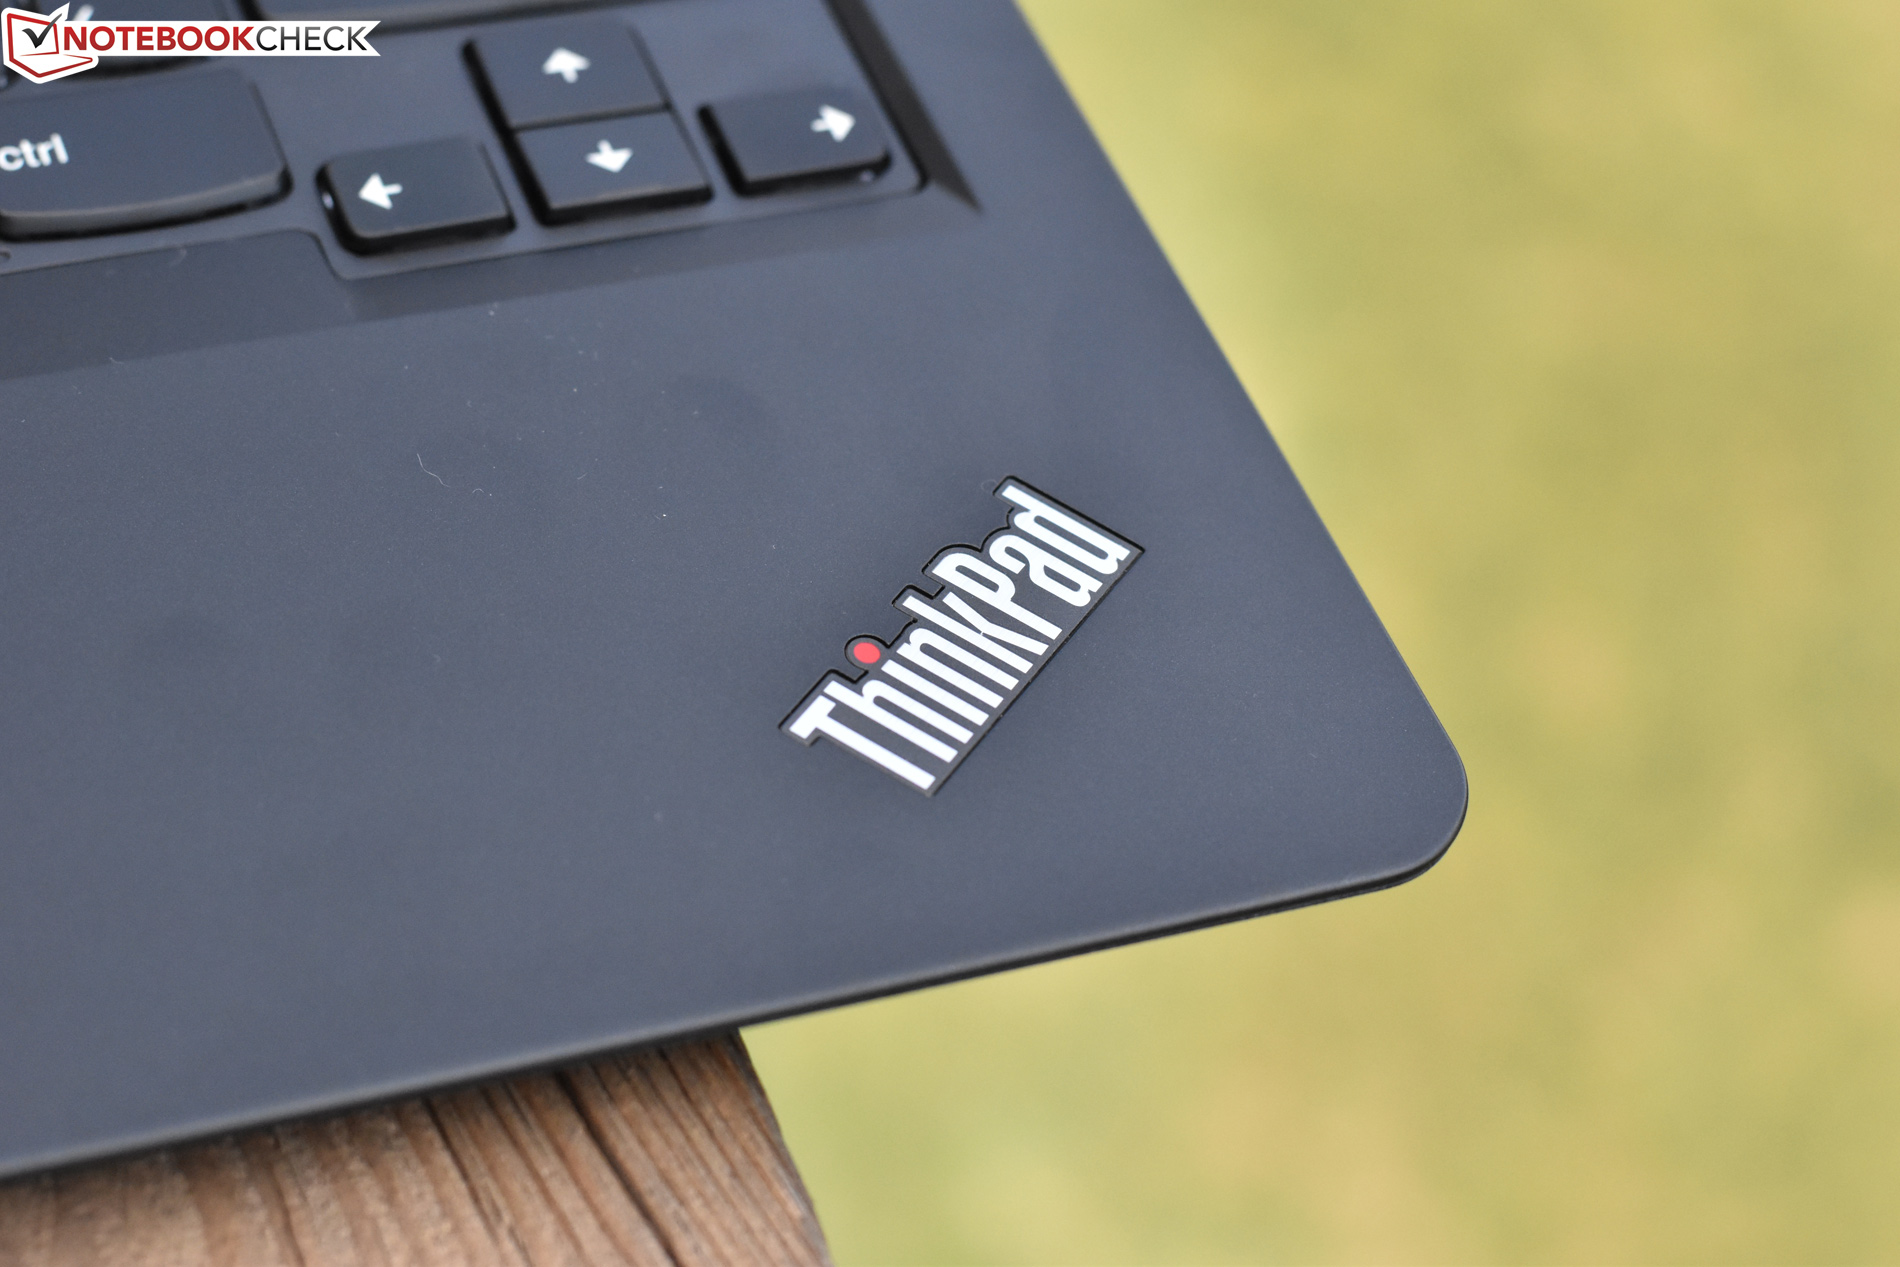 Lenovo ThinkPad 13 Chromebook Touch Notebook - 15211108